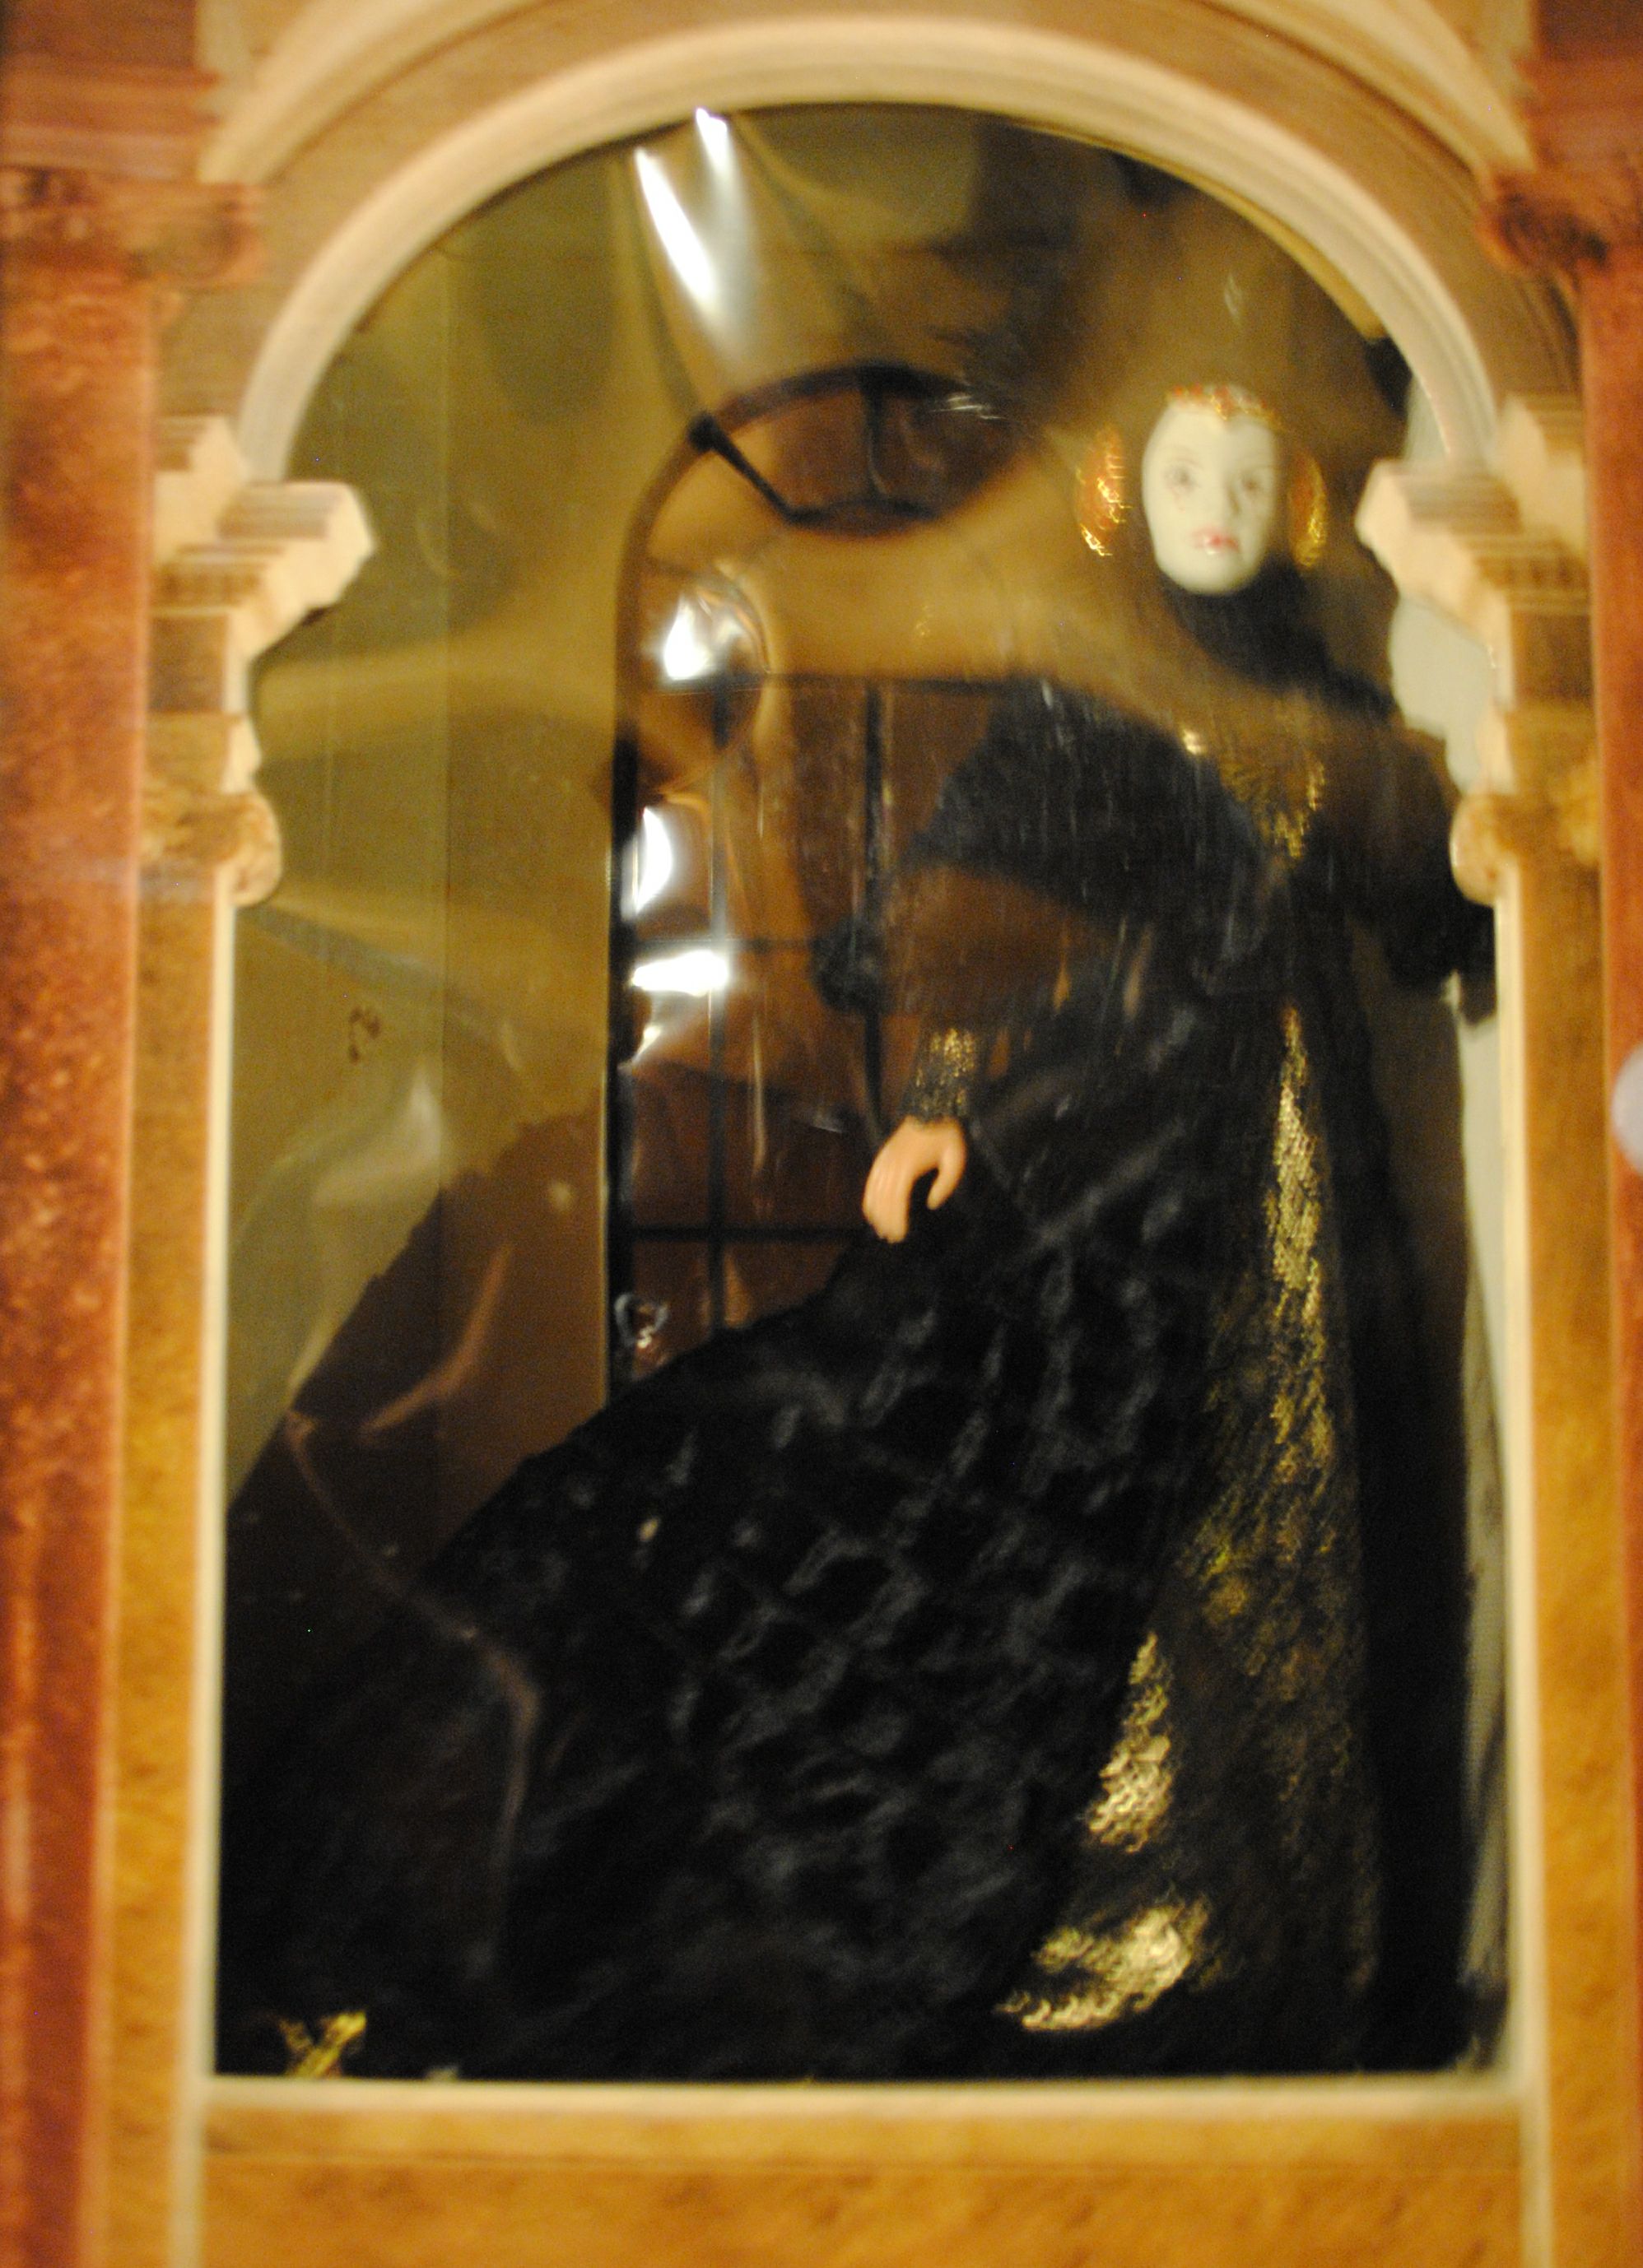 Phantom Menace12 inch figure Queen Amidala Black Travel Gown - Hasbro (Star Wars Episode I The Phantom Menace) action figure collectible [Barcode 0076281617732] - Main Image 1